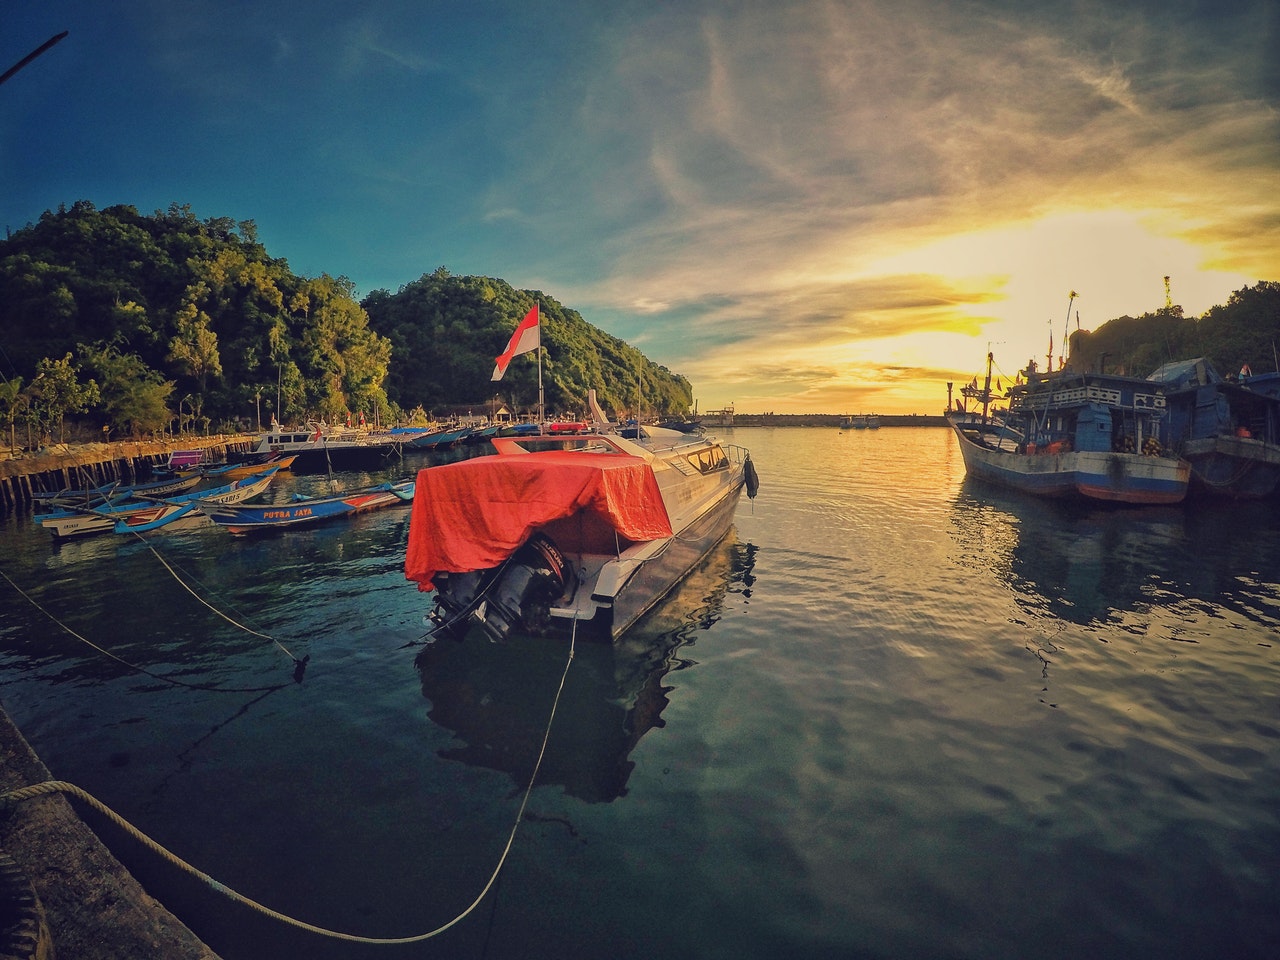 Motor Boat Near Dock during Sunset at Baliem Valley